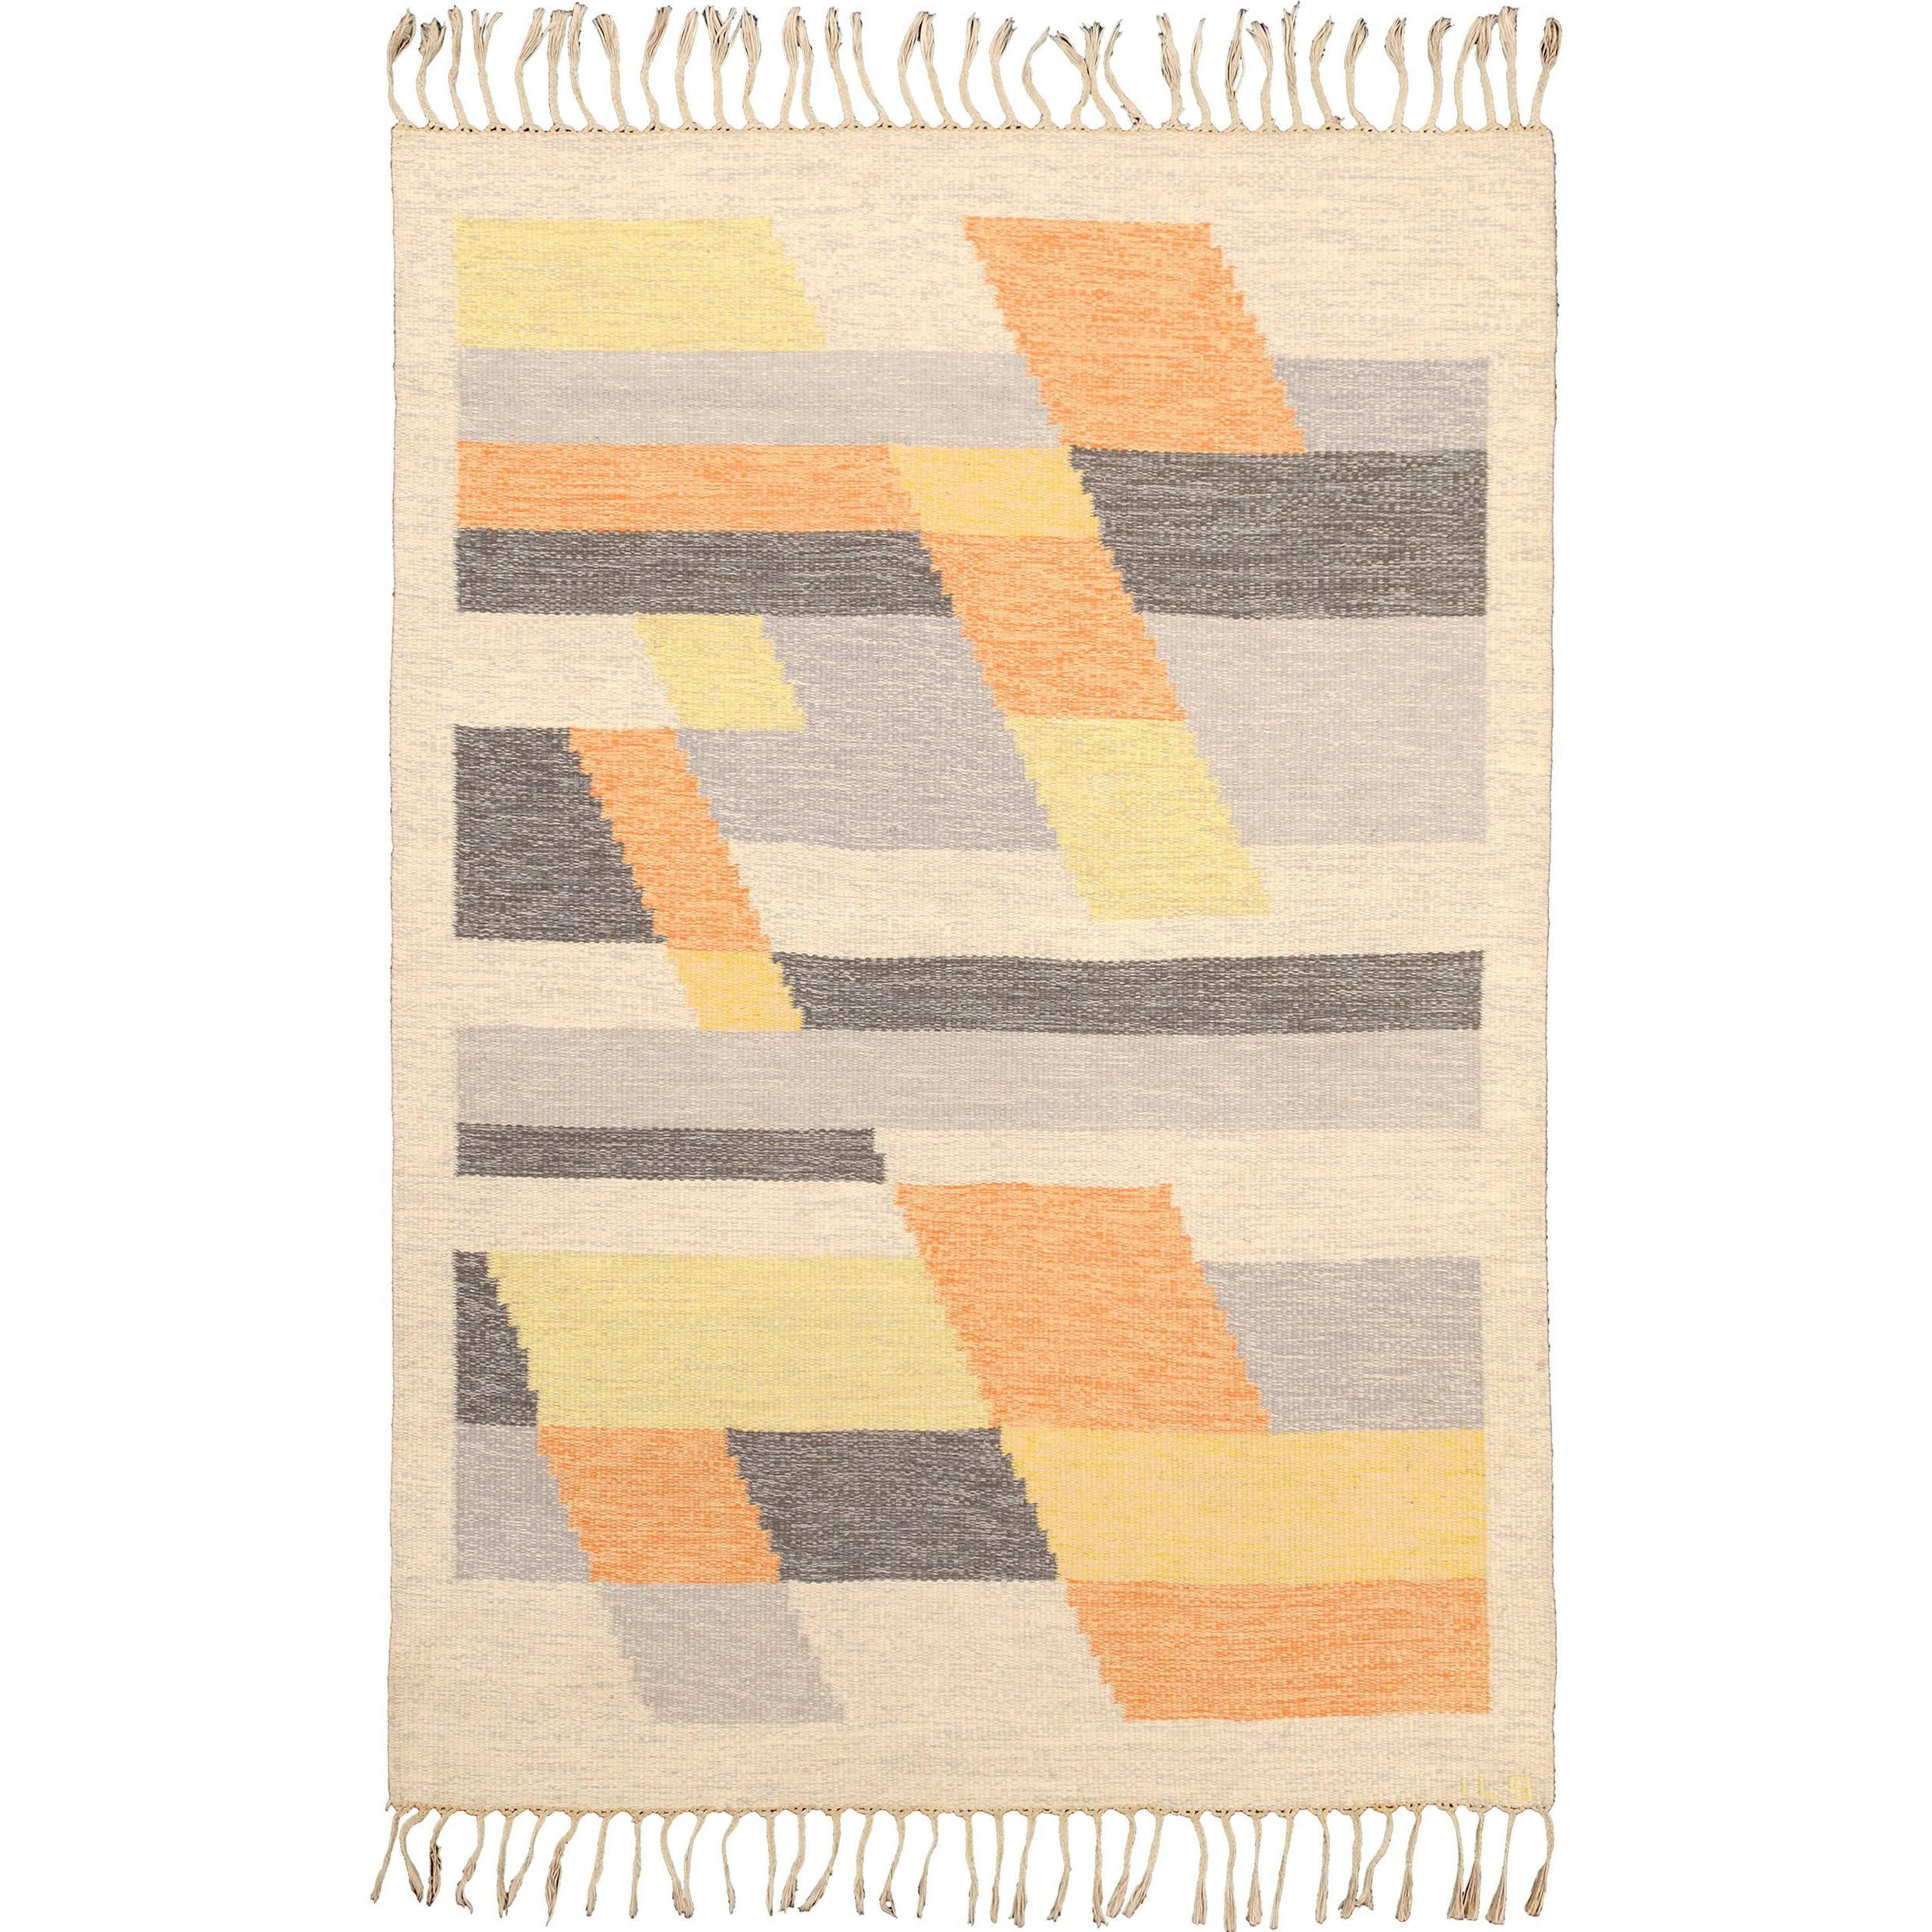 Vintage Swedish Flat-Weave Carpet